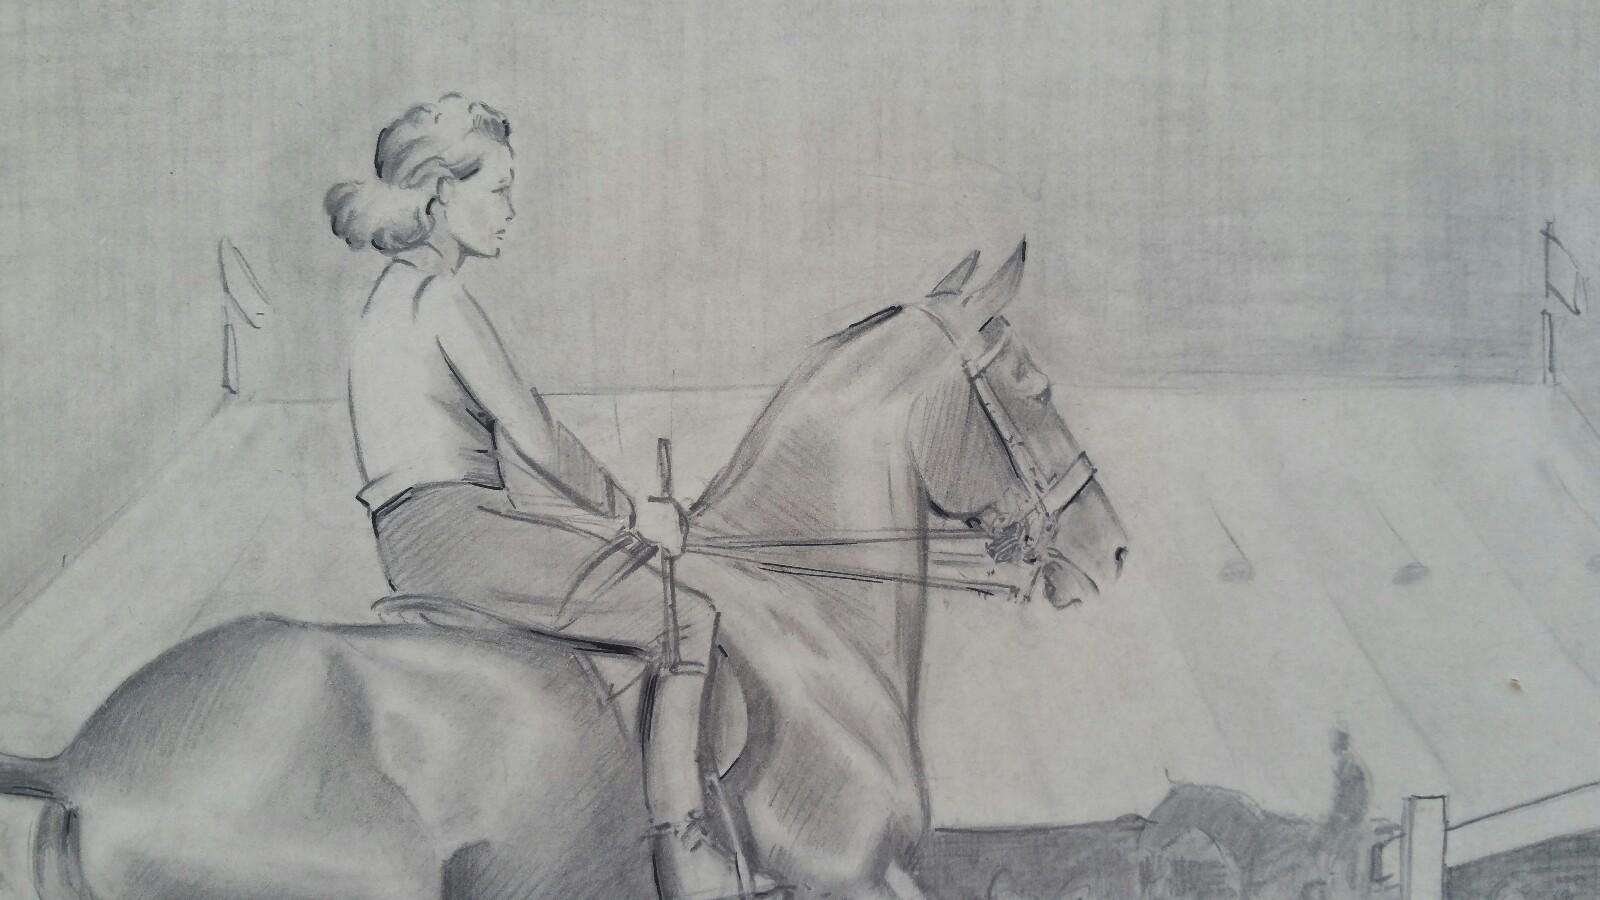 equestrian sporting artist